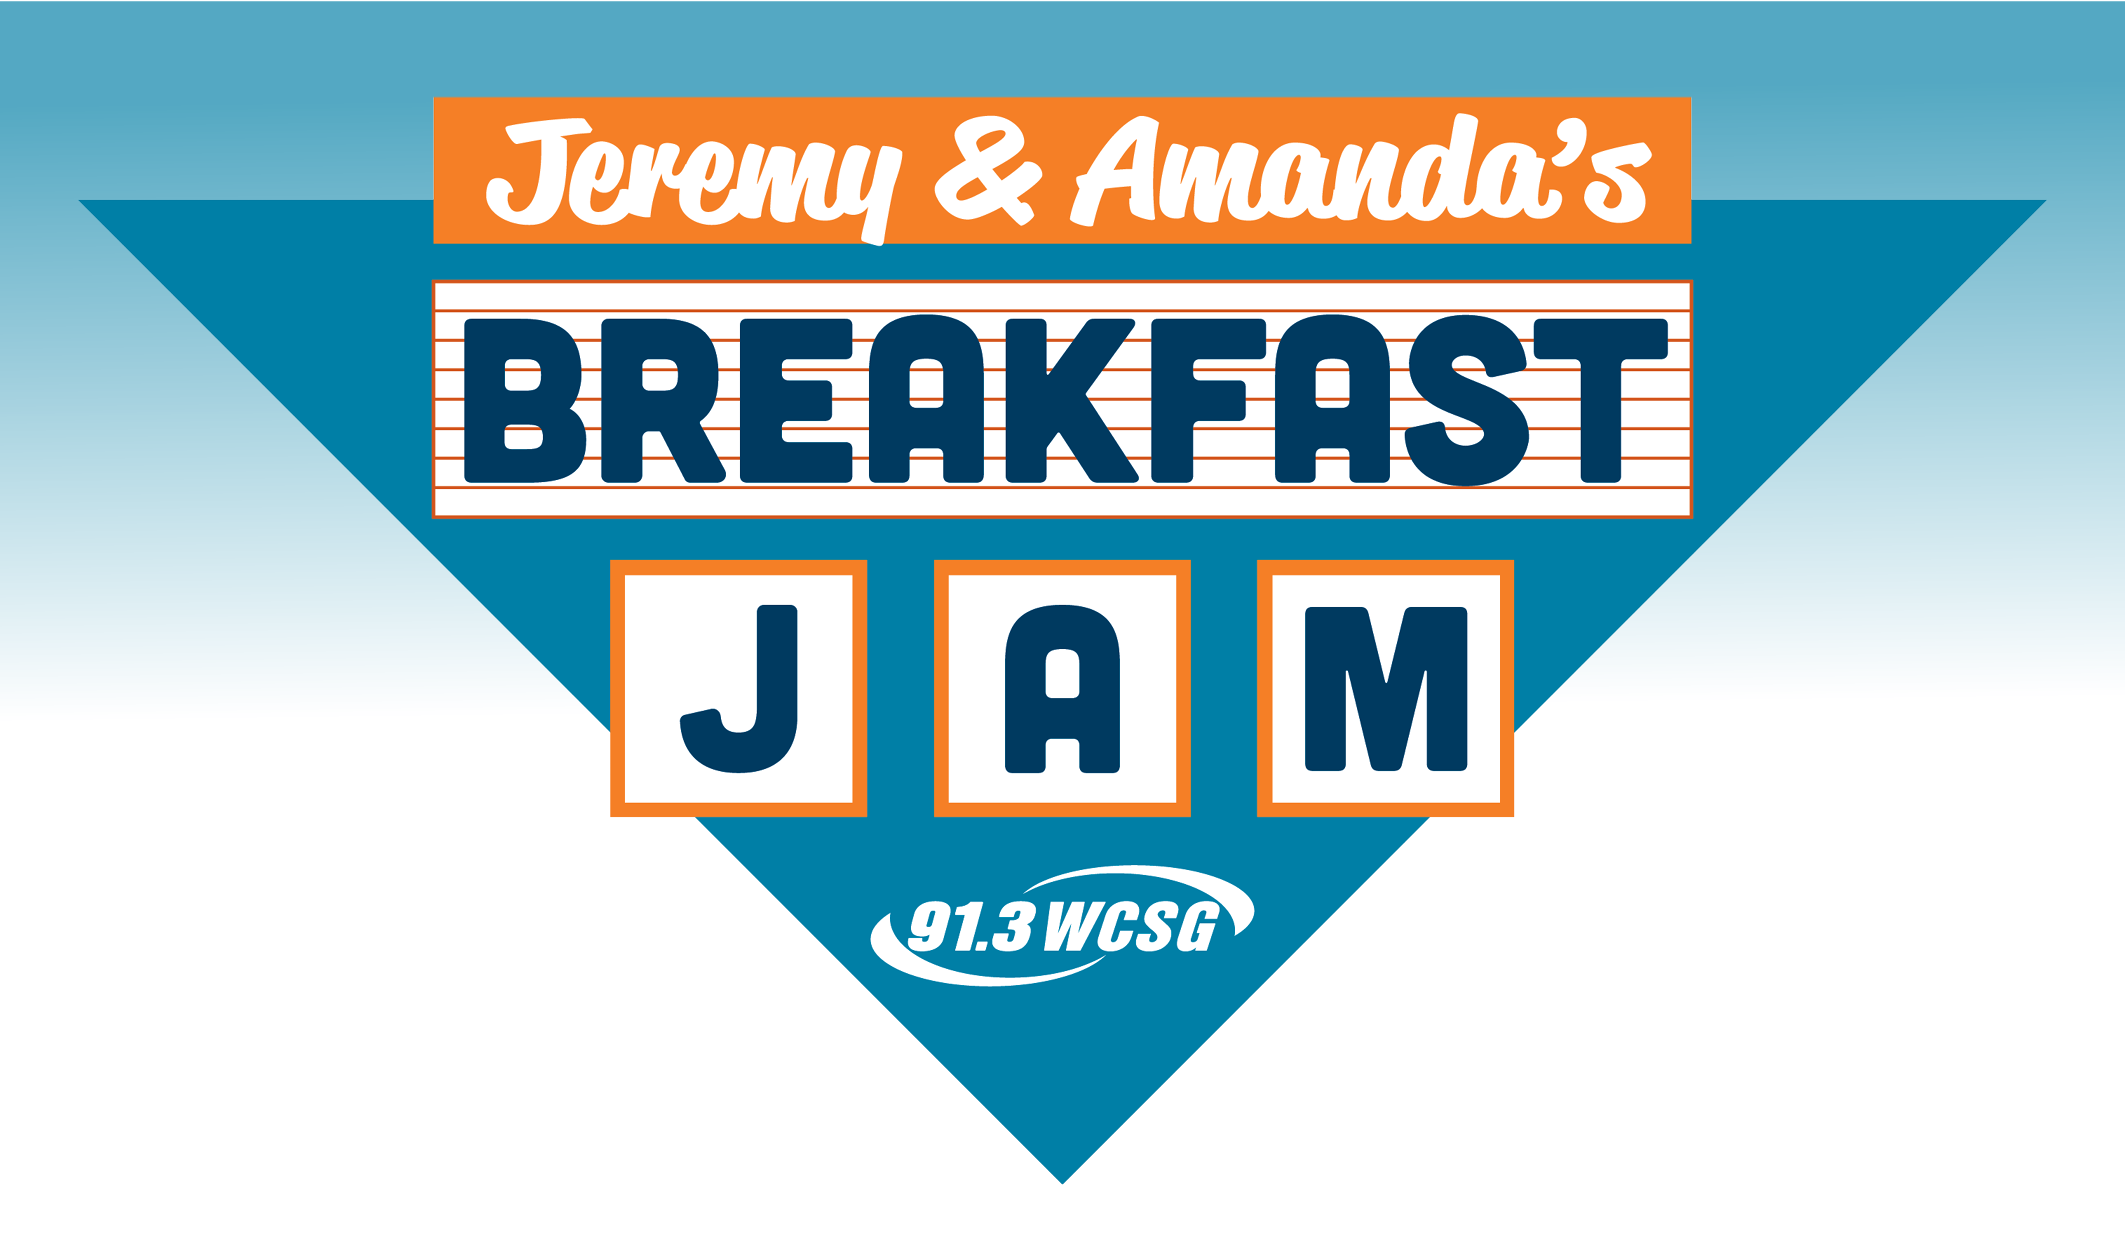 Jeremy & Amanda's Breakfast Jam 91.3 WCSG